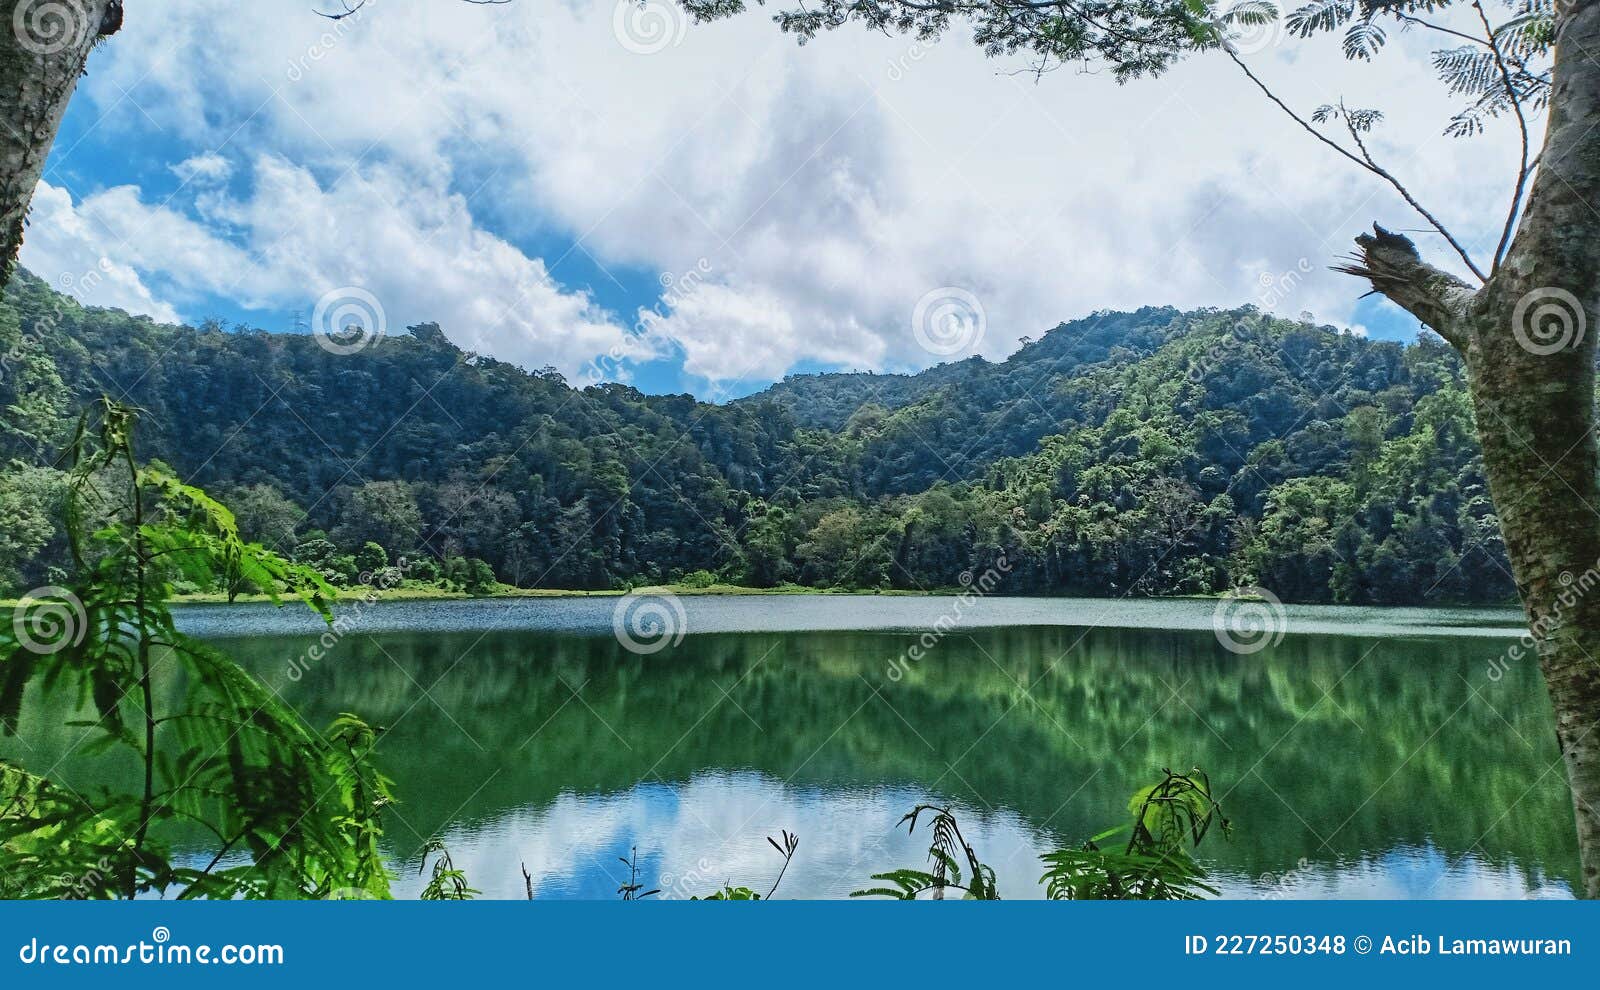 landscape view of ranamese lake in east manggarai, flores island, east nusa tenggara, indonesia